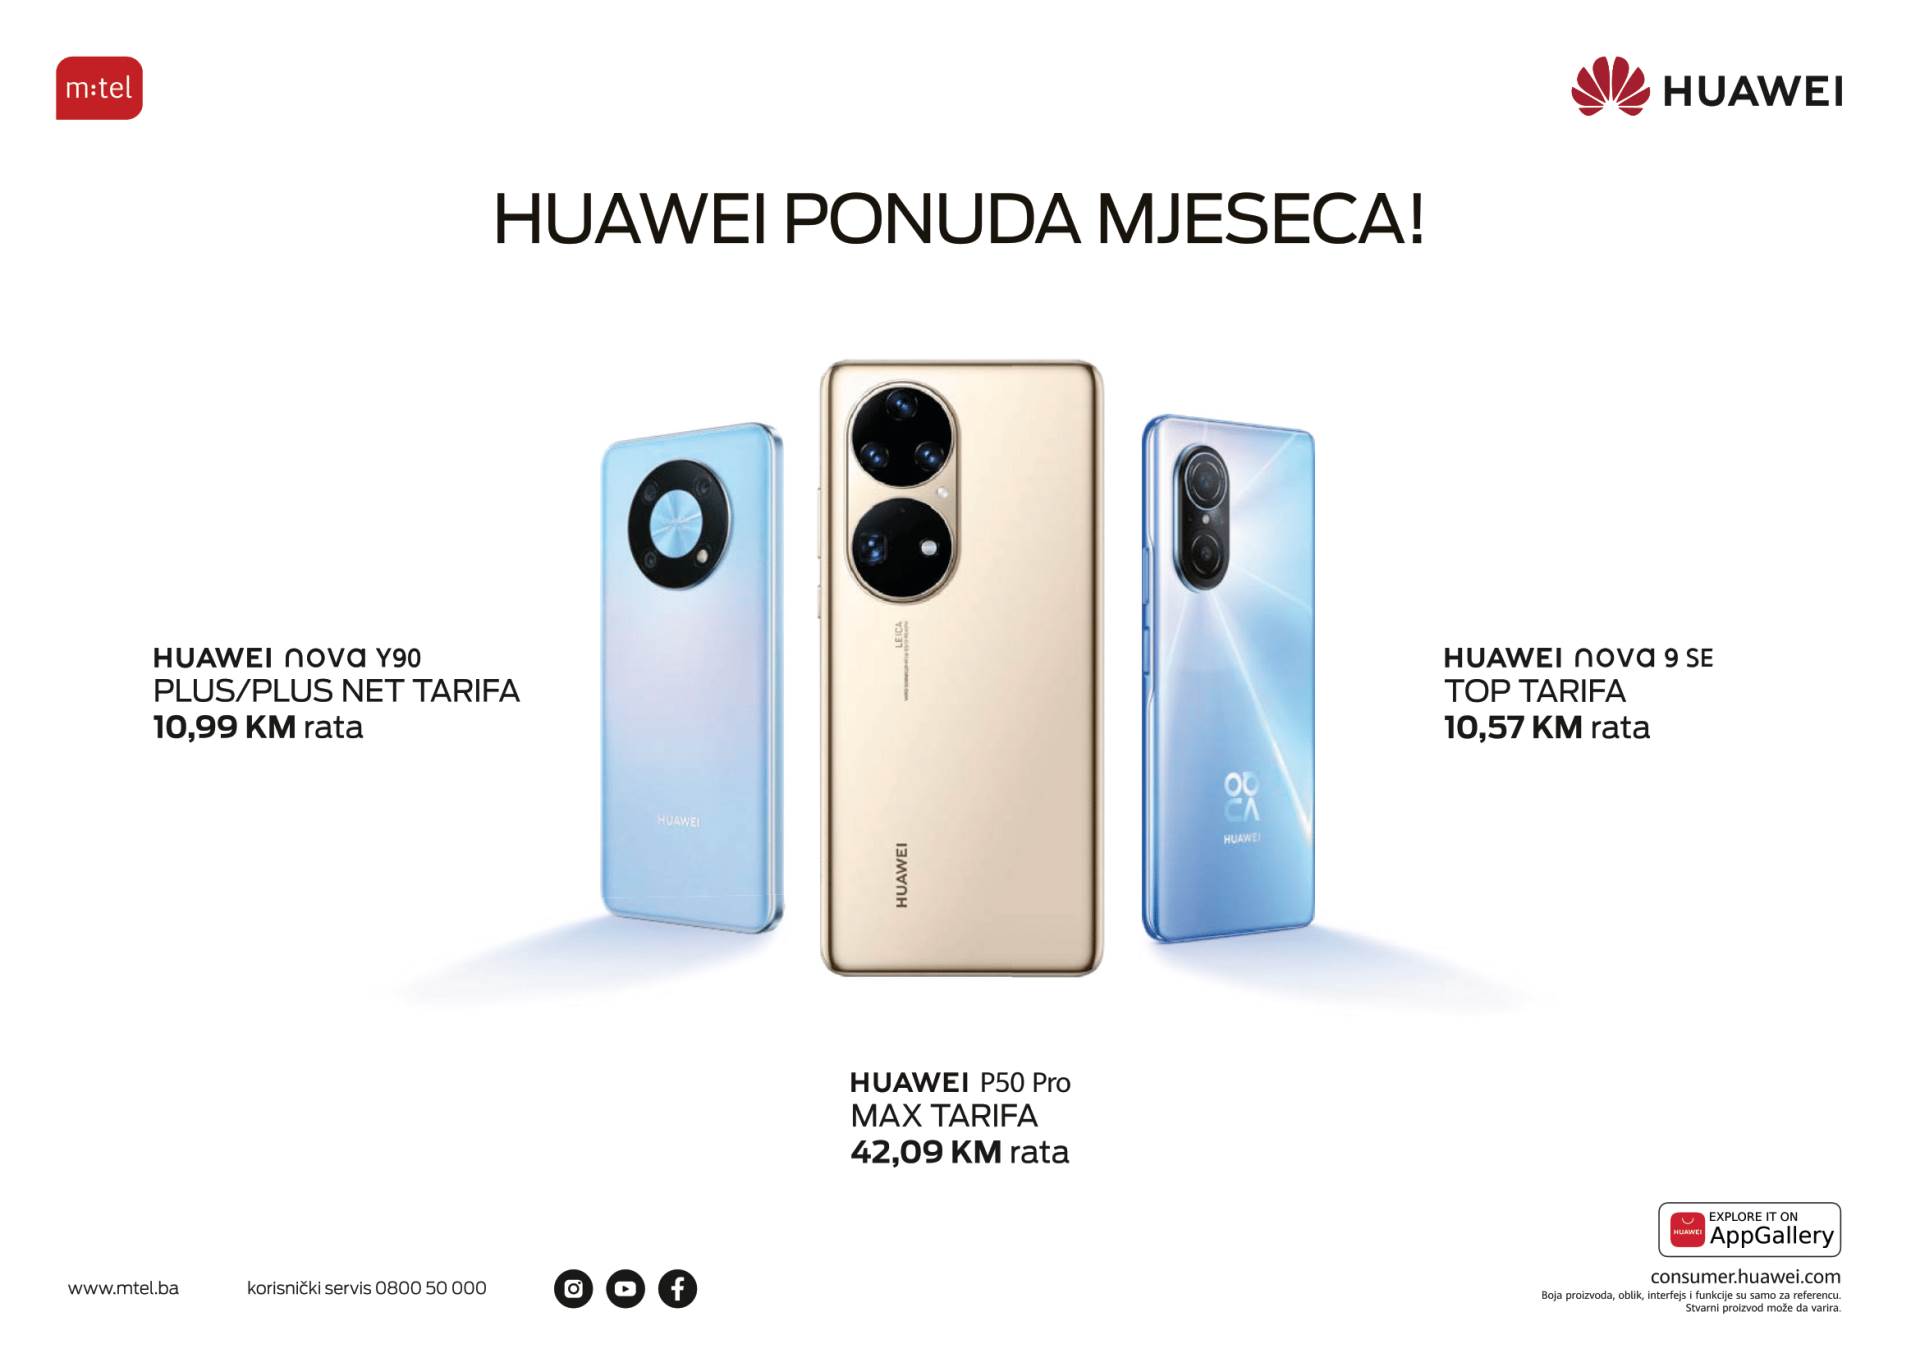  m:tel ponuda Huawei P50 Pro, Huawei nova 9 SE i Huawei nova Y90 